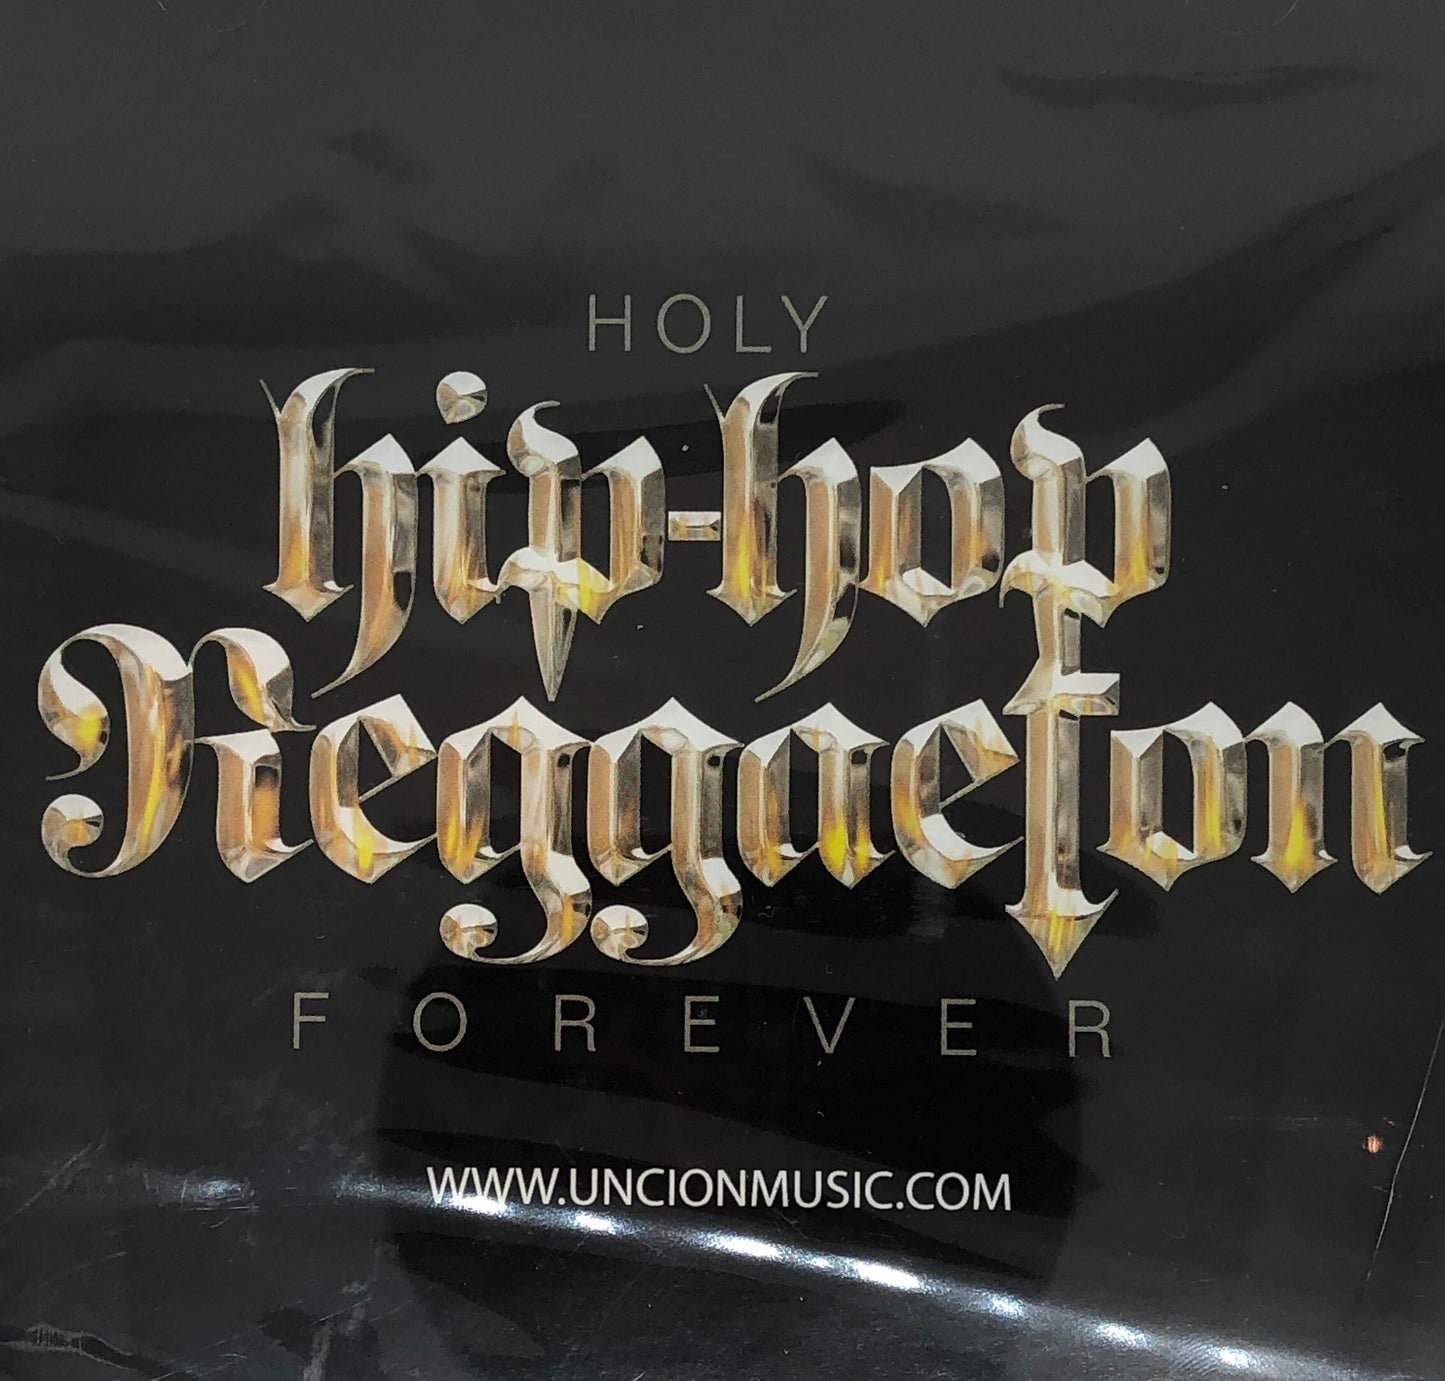 CD - Holy Hip Hop & Reggaeton Forever - Special Eric, Valette, Manny, Montes, Moya RD, Yettdali William, Goyo, MID y muchos mas...